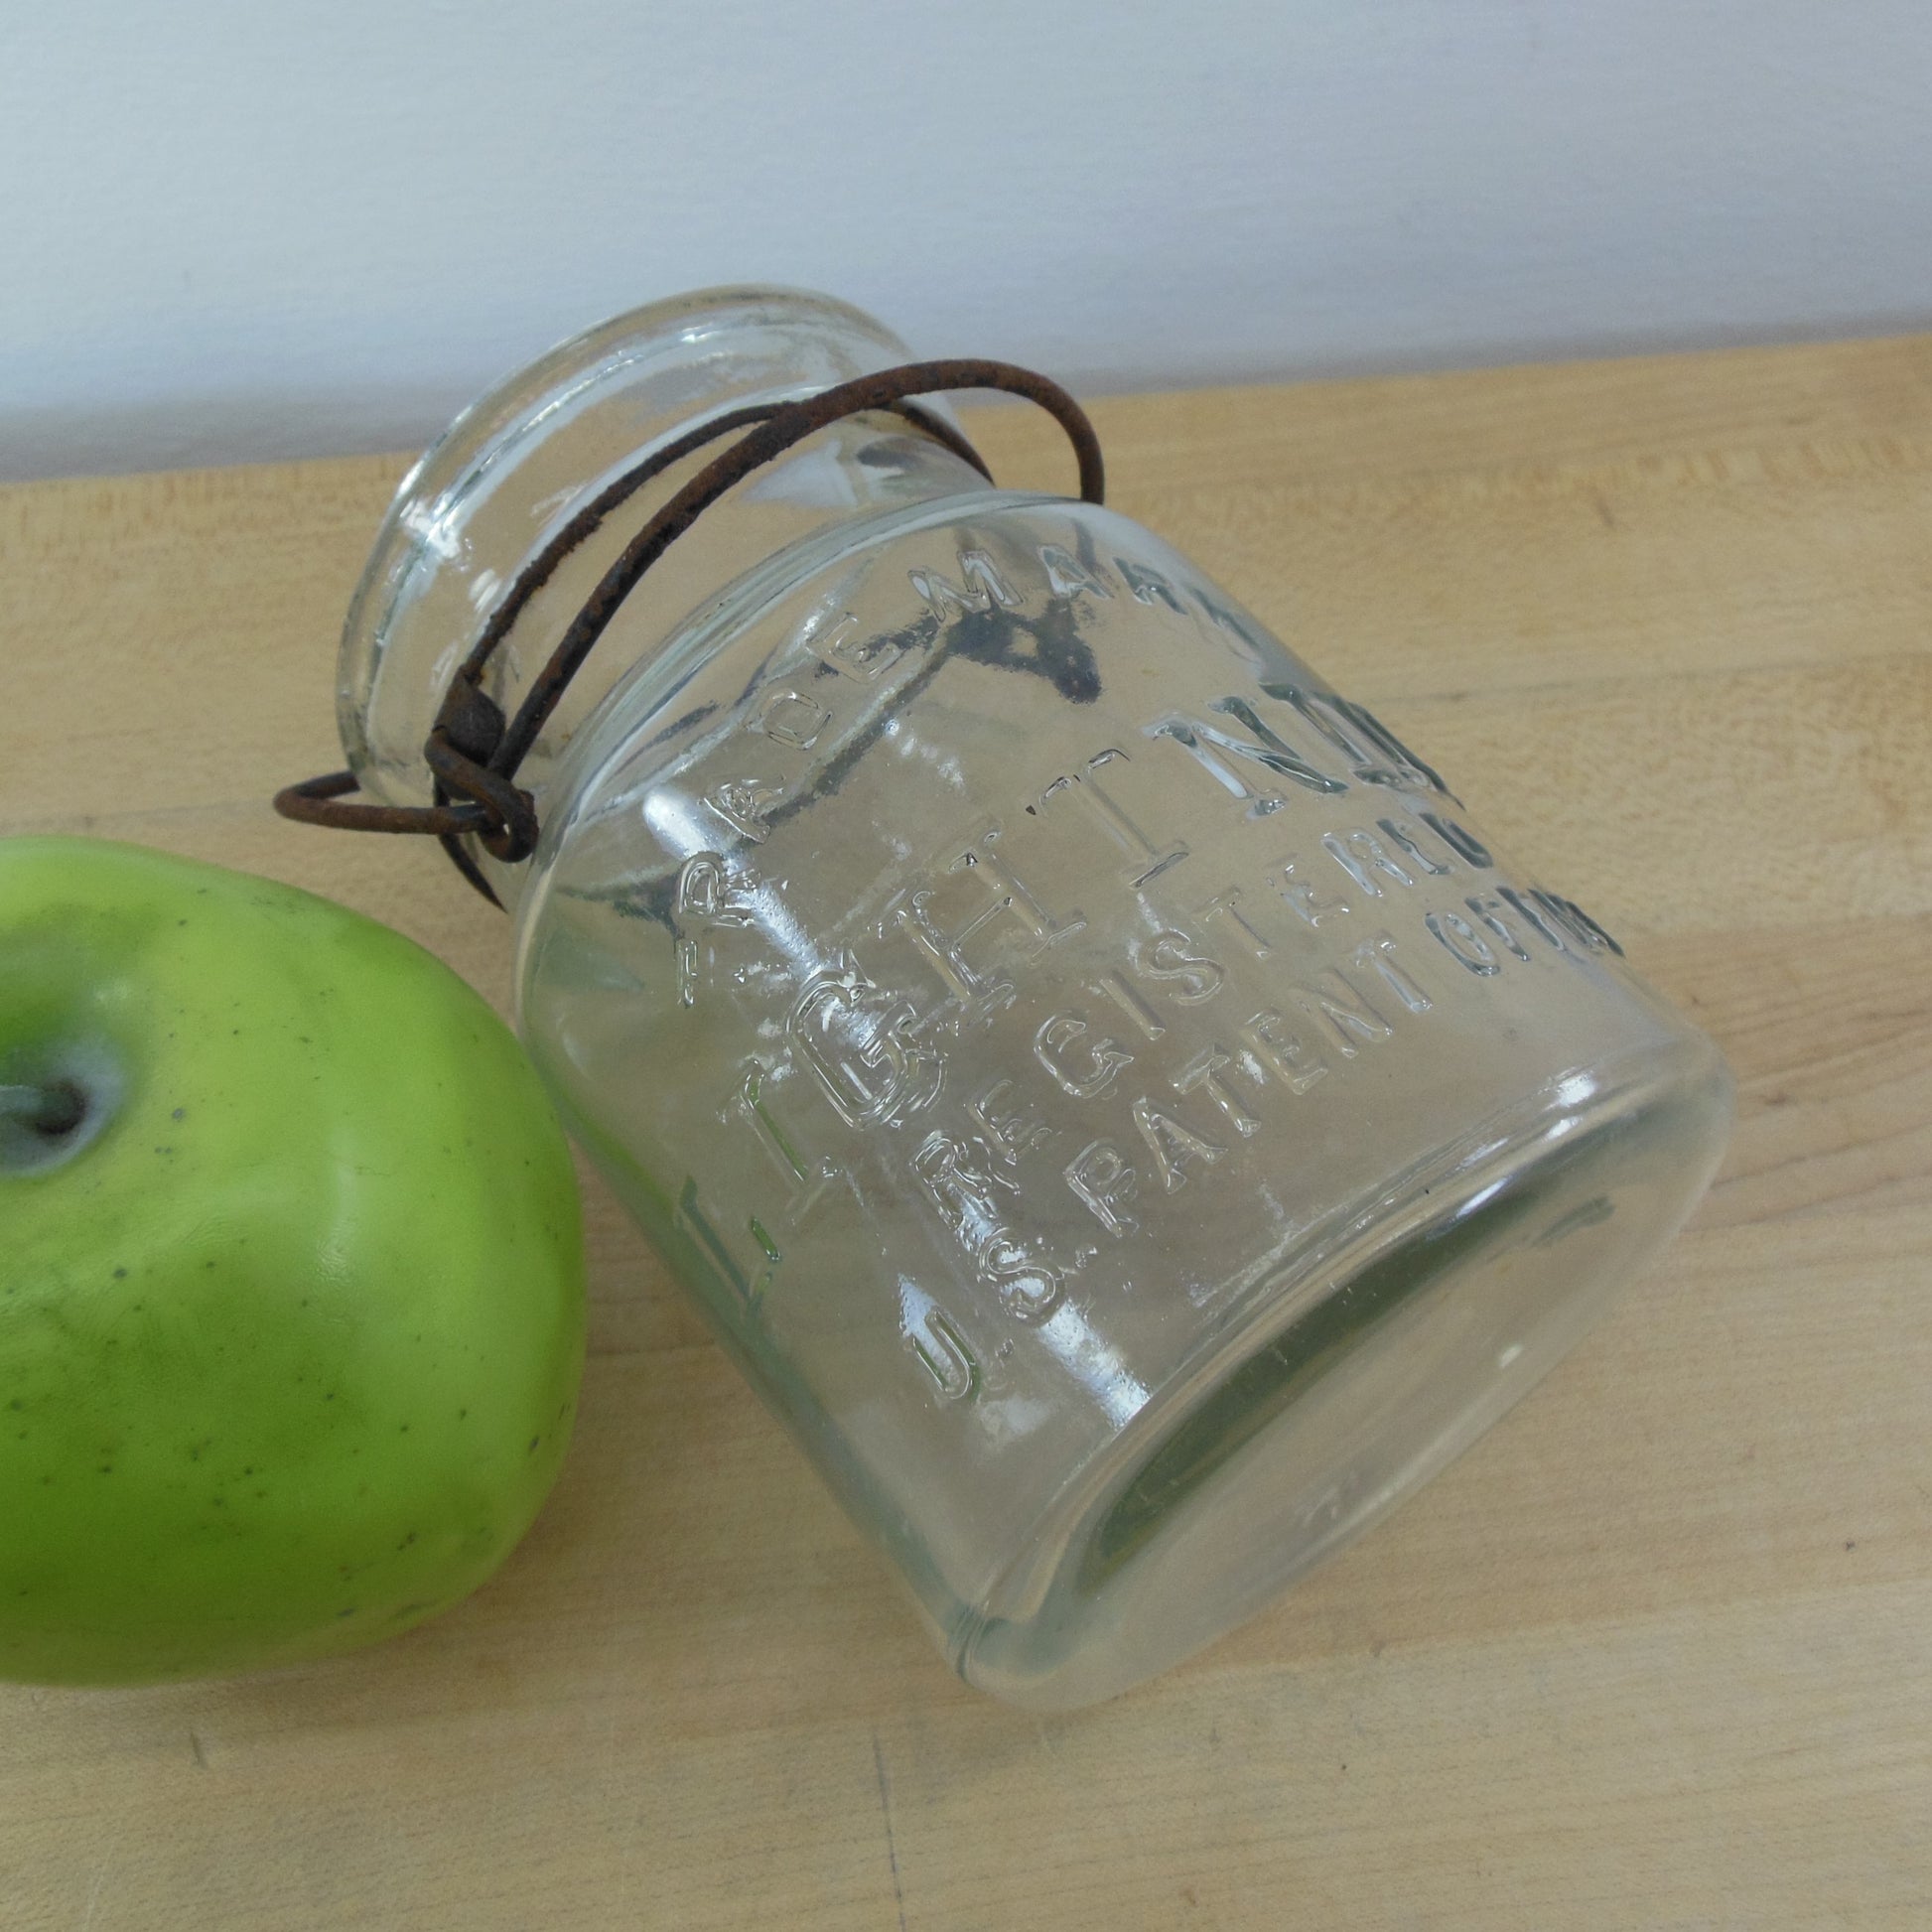 Lightning Putnam Trademark Patent Pint Clear Glass Fruit Canning Jar Registered US Patent Office